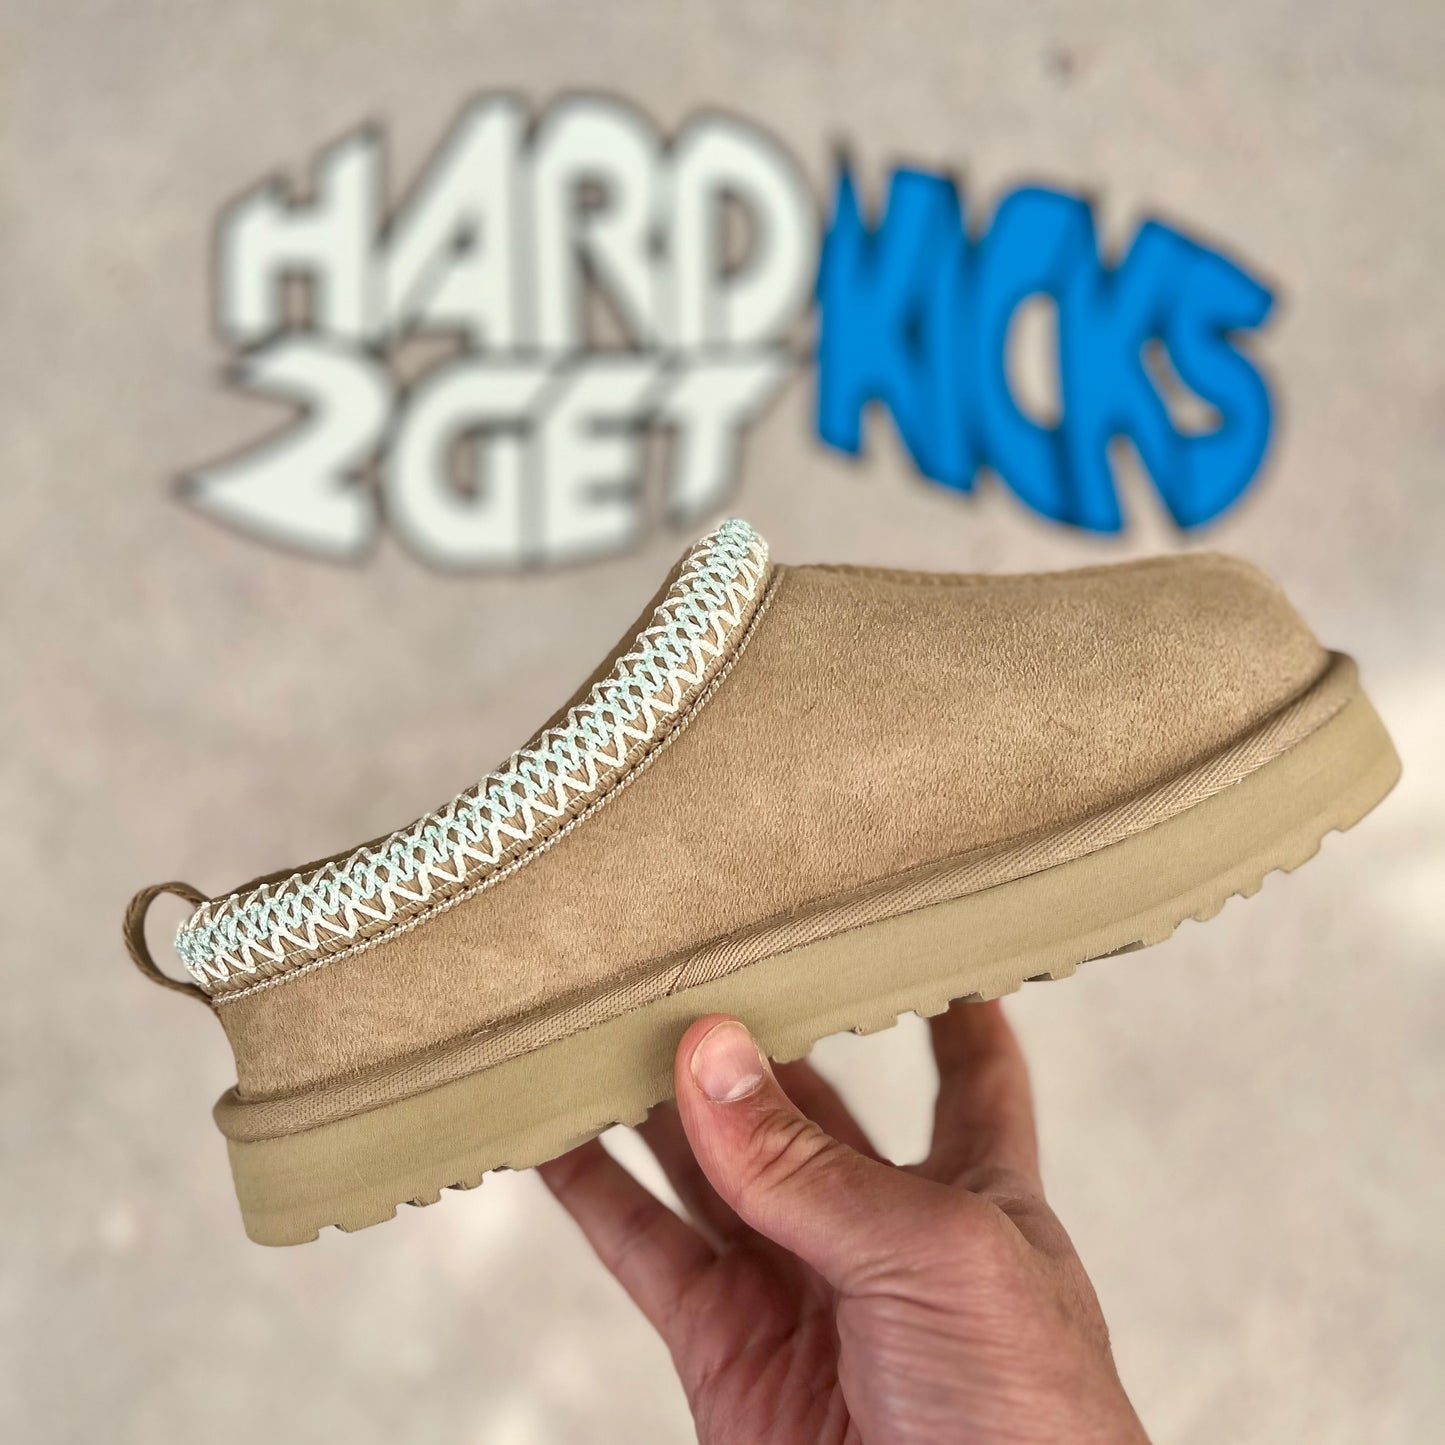 Ugg Tazz Kids Slippers - Sand